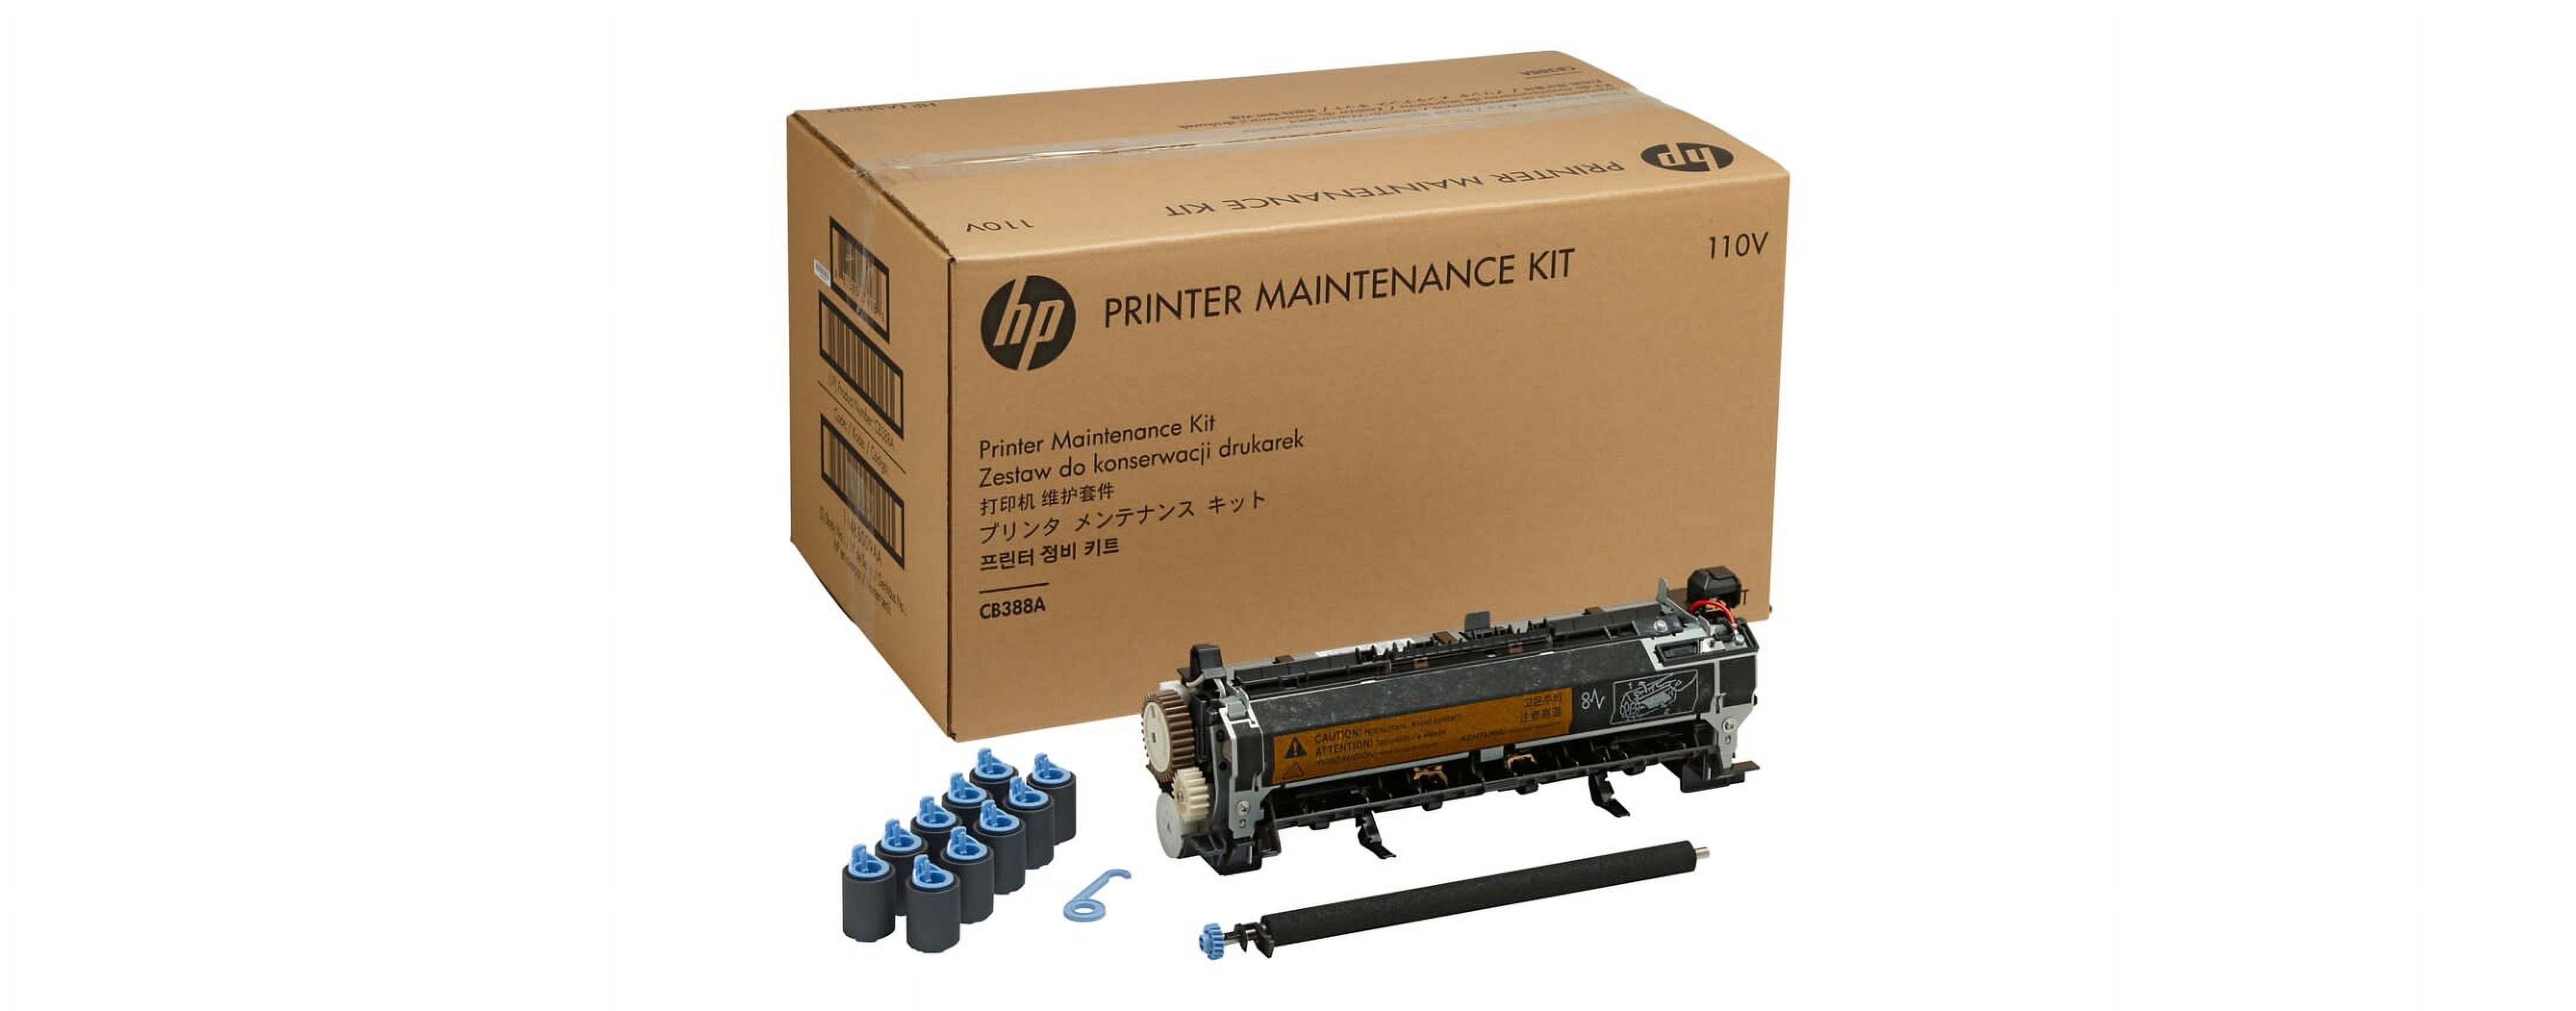 HP 110V User Maintenance Kit for Mono Laserjet P4014/P4015/P4510(CB388A) - image 3 of 3